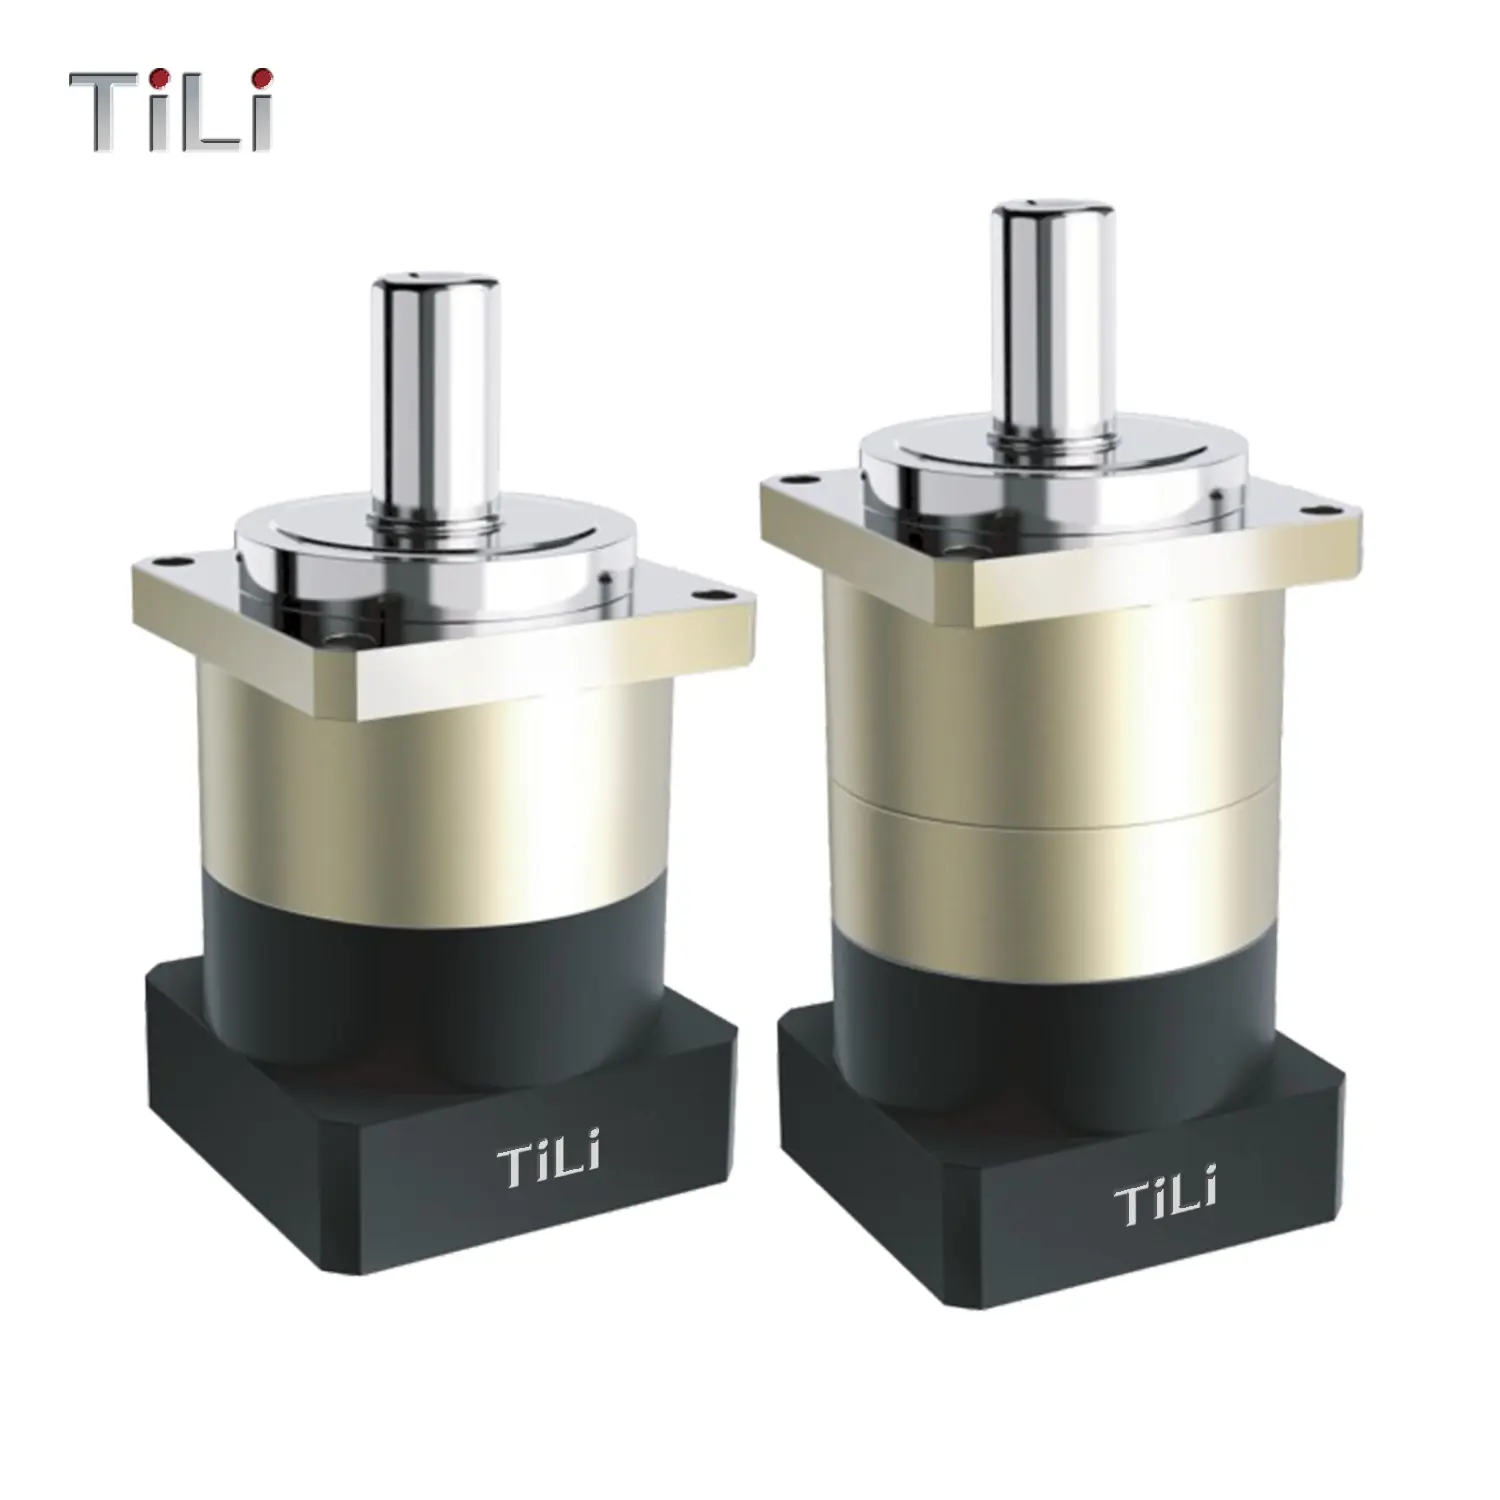 TILI TVB Series Precision Planetary Gear Gear Unit Gearbox Gearmotor Speed Reduce